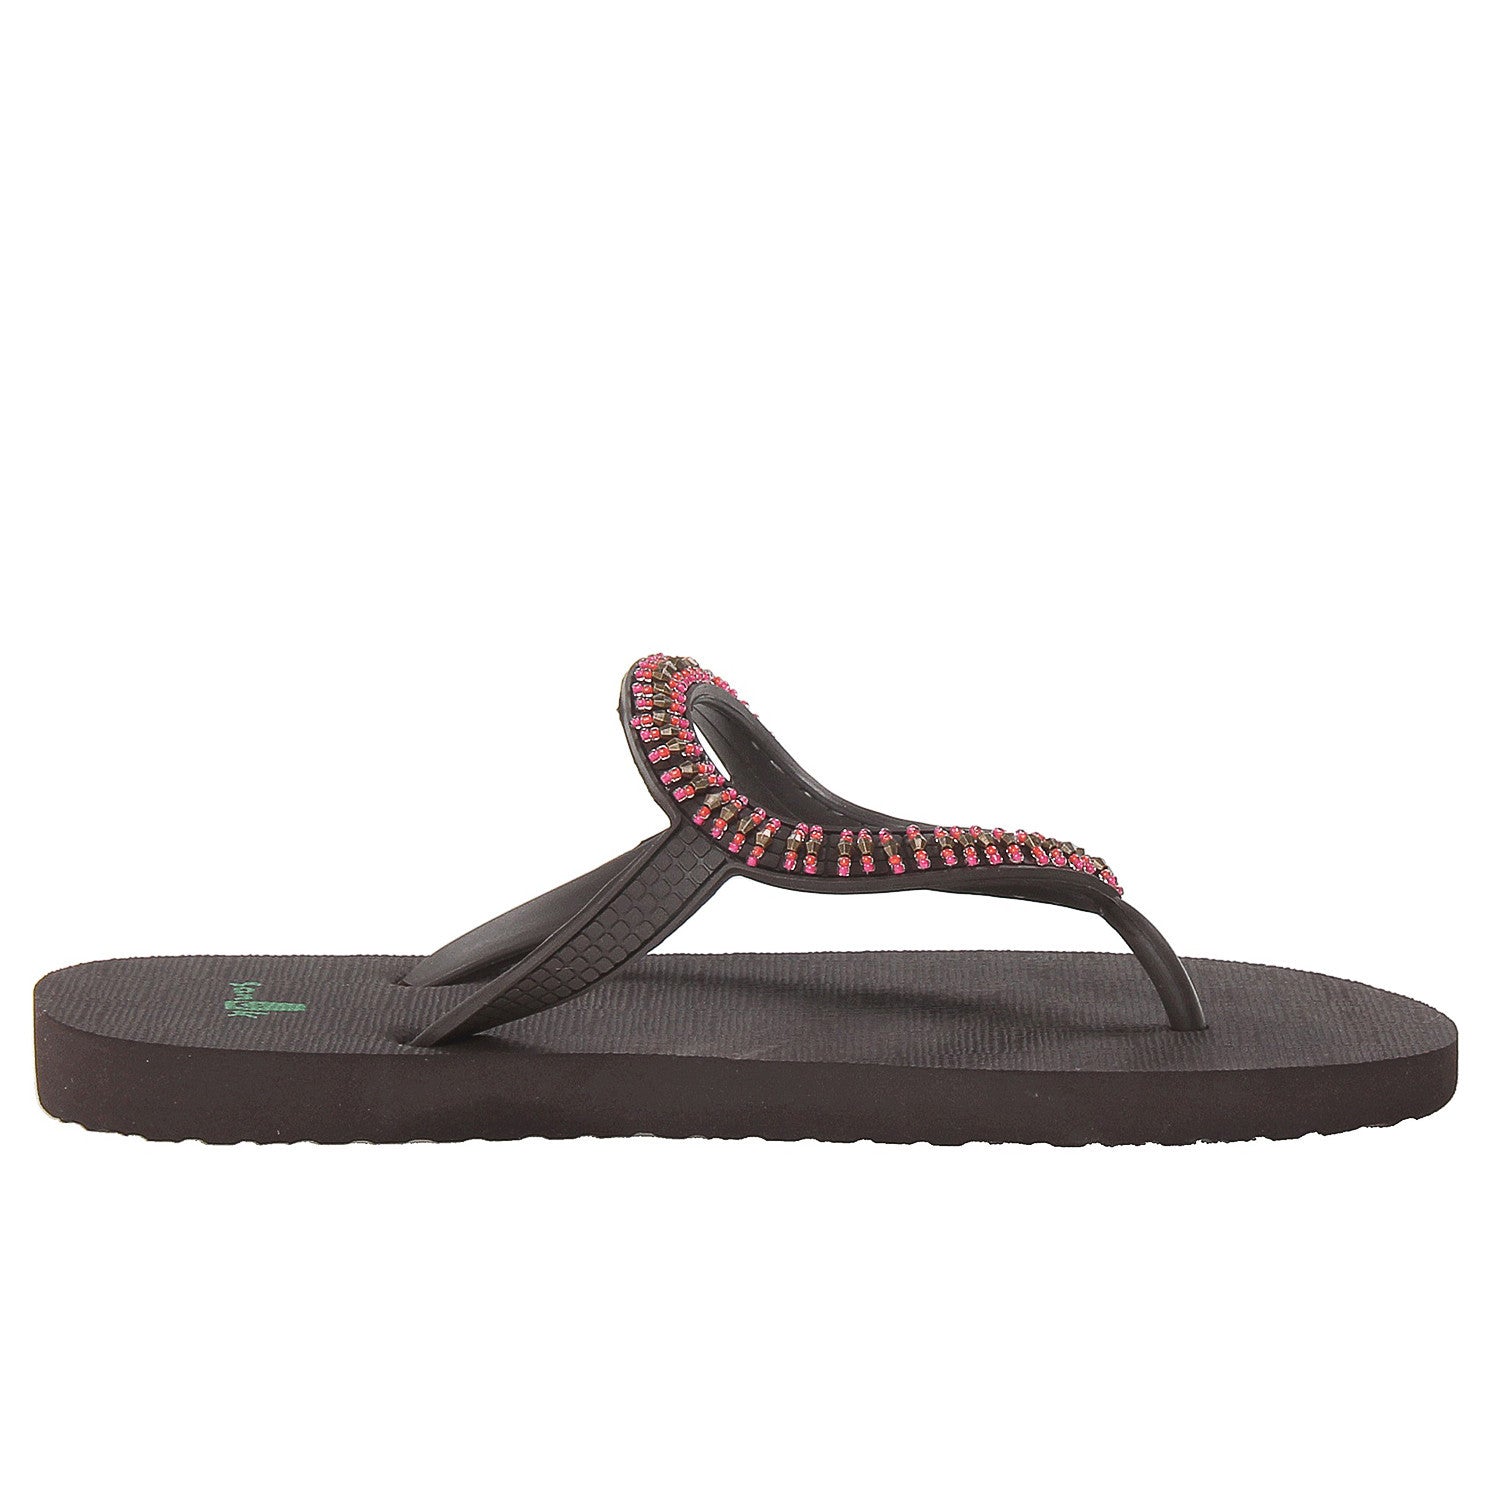 SANUK Sanuk IBIZA NATIVE - Sandals - Women's - carbon - Private Sport Shop